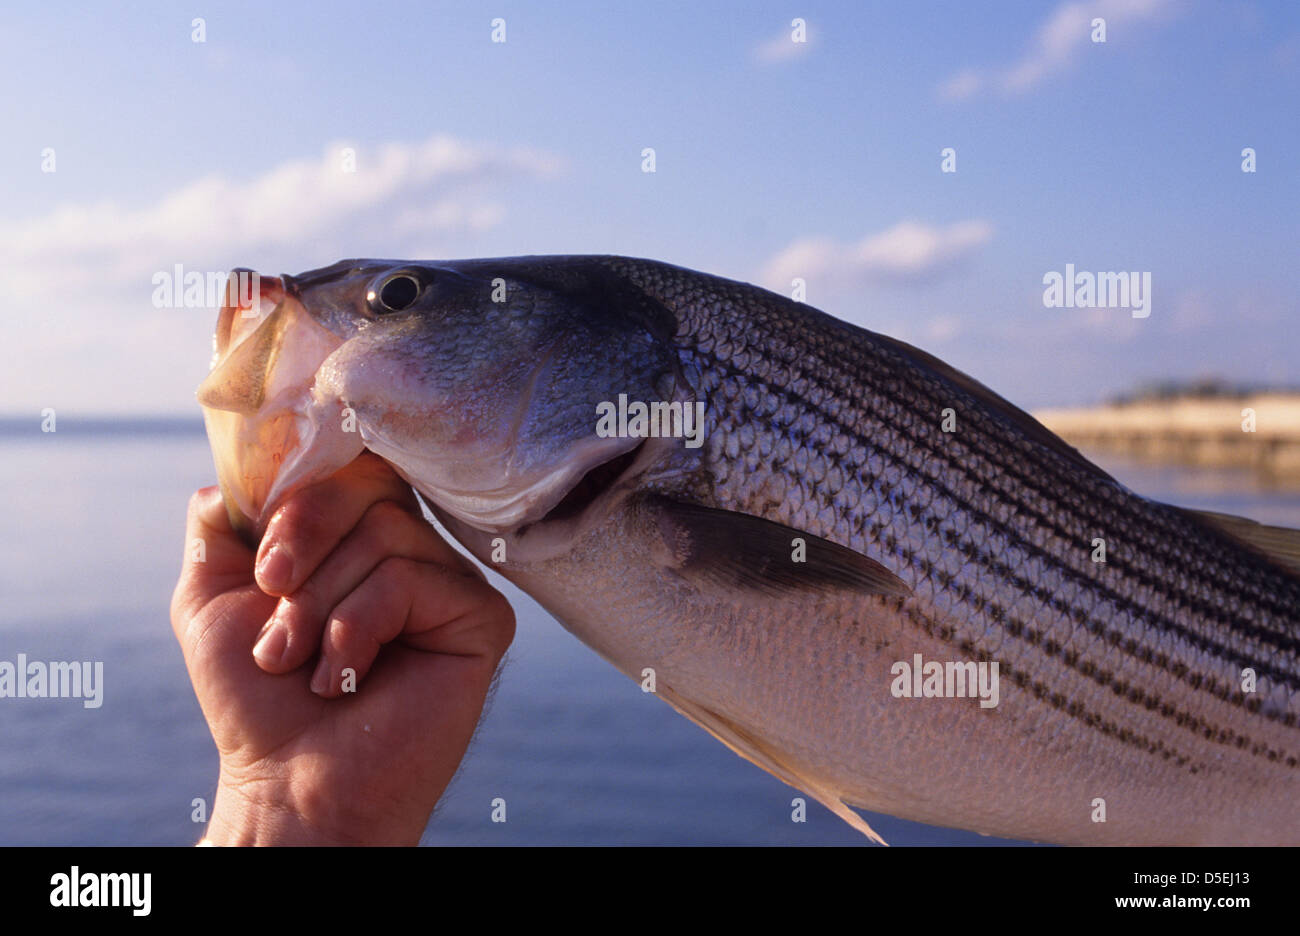 A freshwater striped bass (Morone saxatilis) from Lake Buchanan